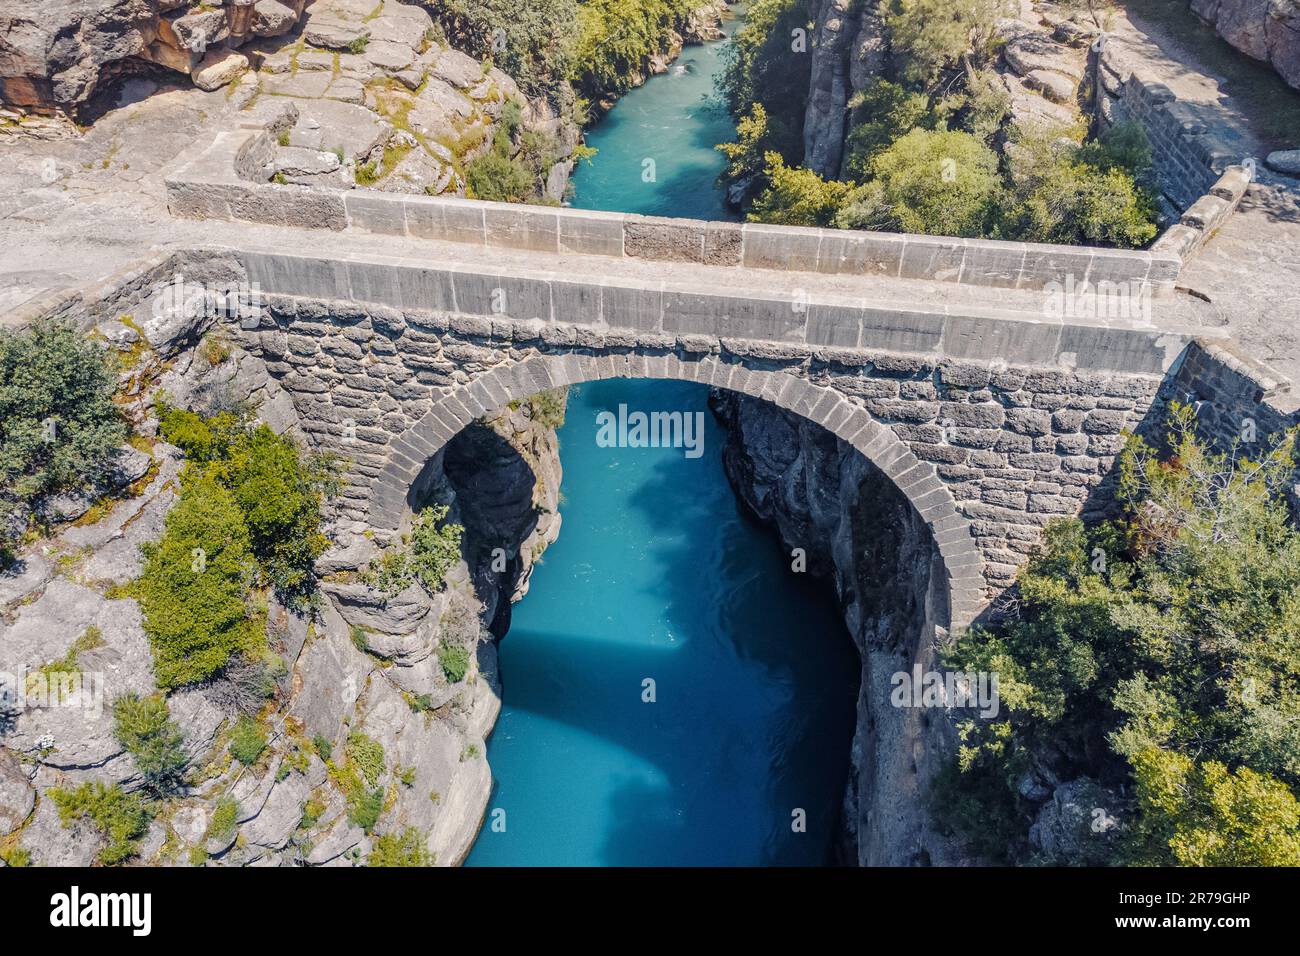 Koprulu ancient bridge in Tazi canyon in Antalya region Stock Photo